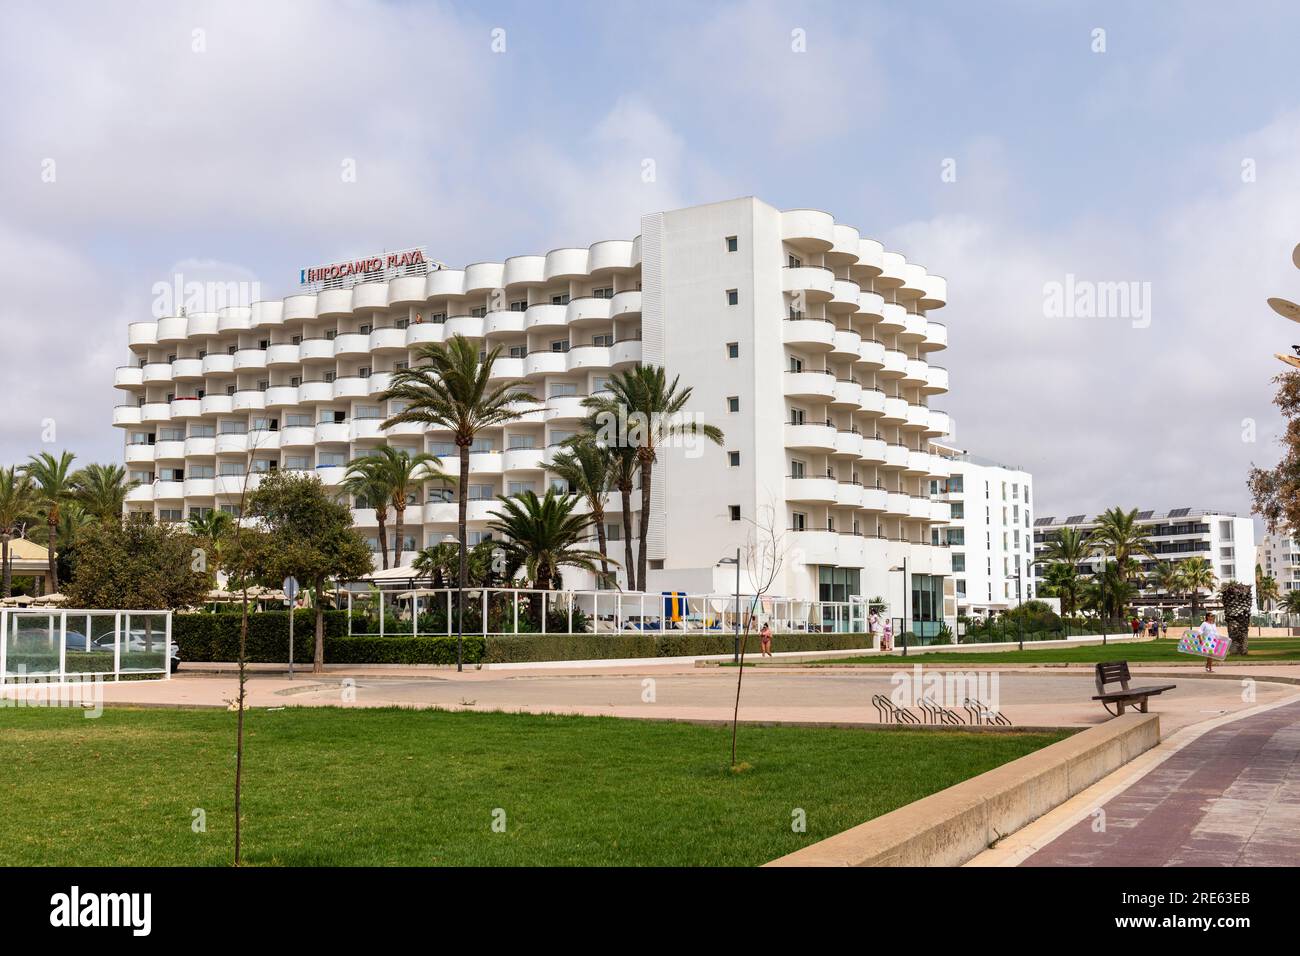 HIPOTELS Hipocampo Playa hotel, Av. sa Coma, beach promenade, Cala Millor, Majorca (Mallorca), Balearic Islands, Spain, Europe Stock Photo